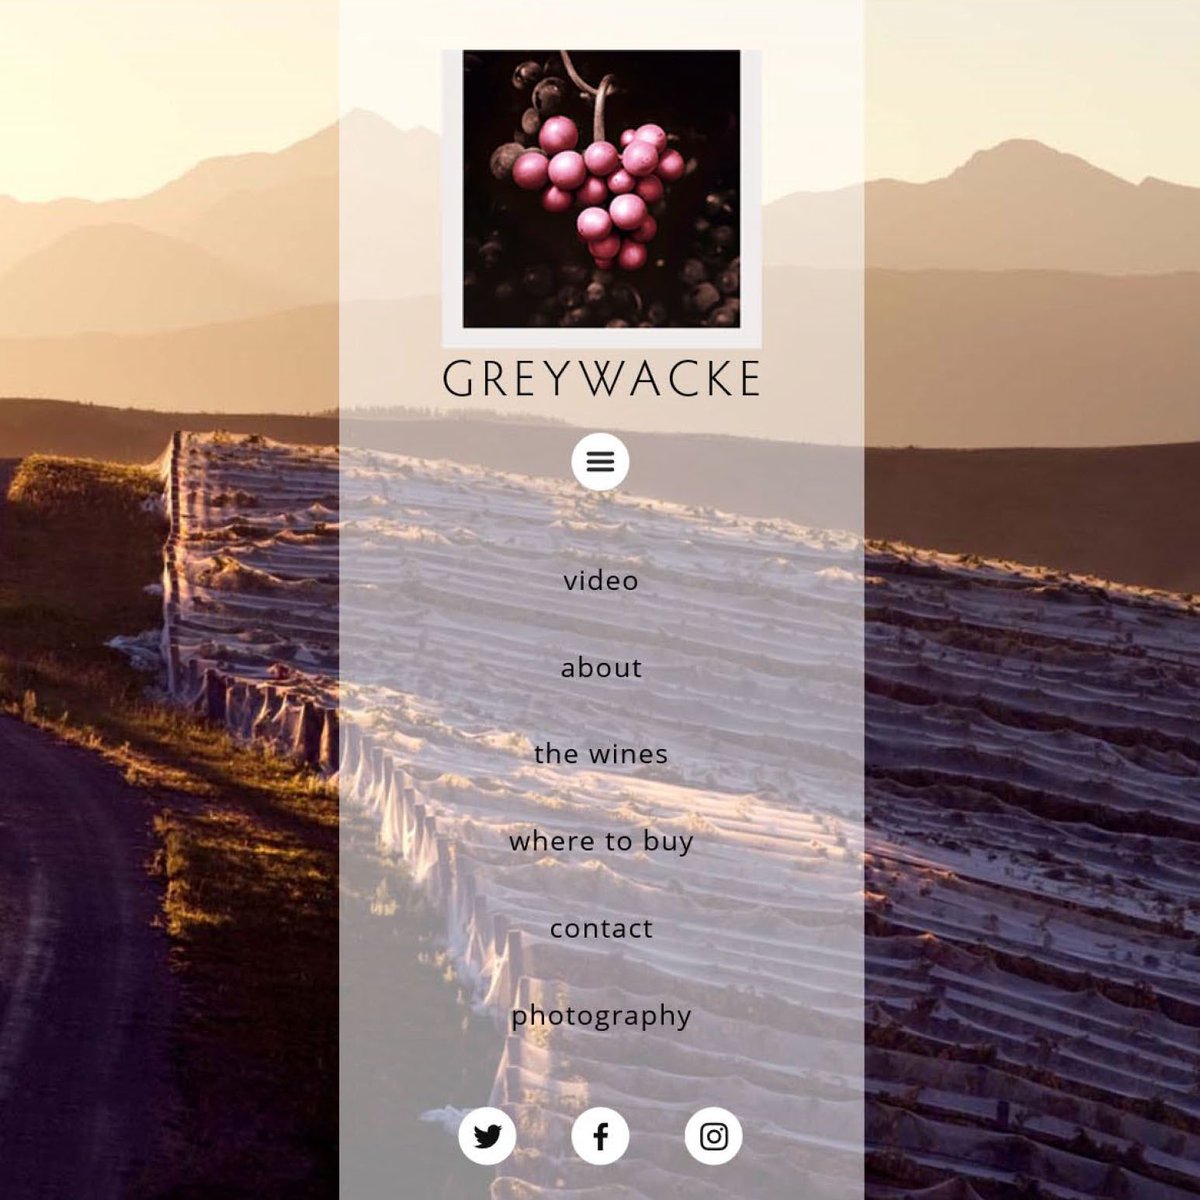 Say hello to Greywacke’s new look website! Link in bio. 

#newyear #newyearnewlook #web #tenthanniversary #newwebsite #greywacke #newzealand #wine #nzwine #marlborough #kevinjudd #photography